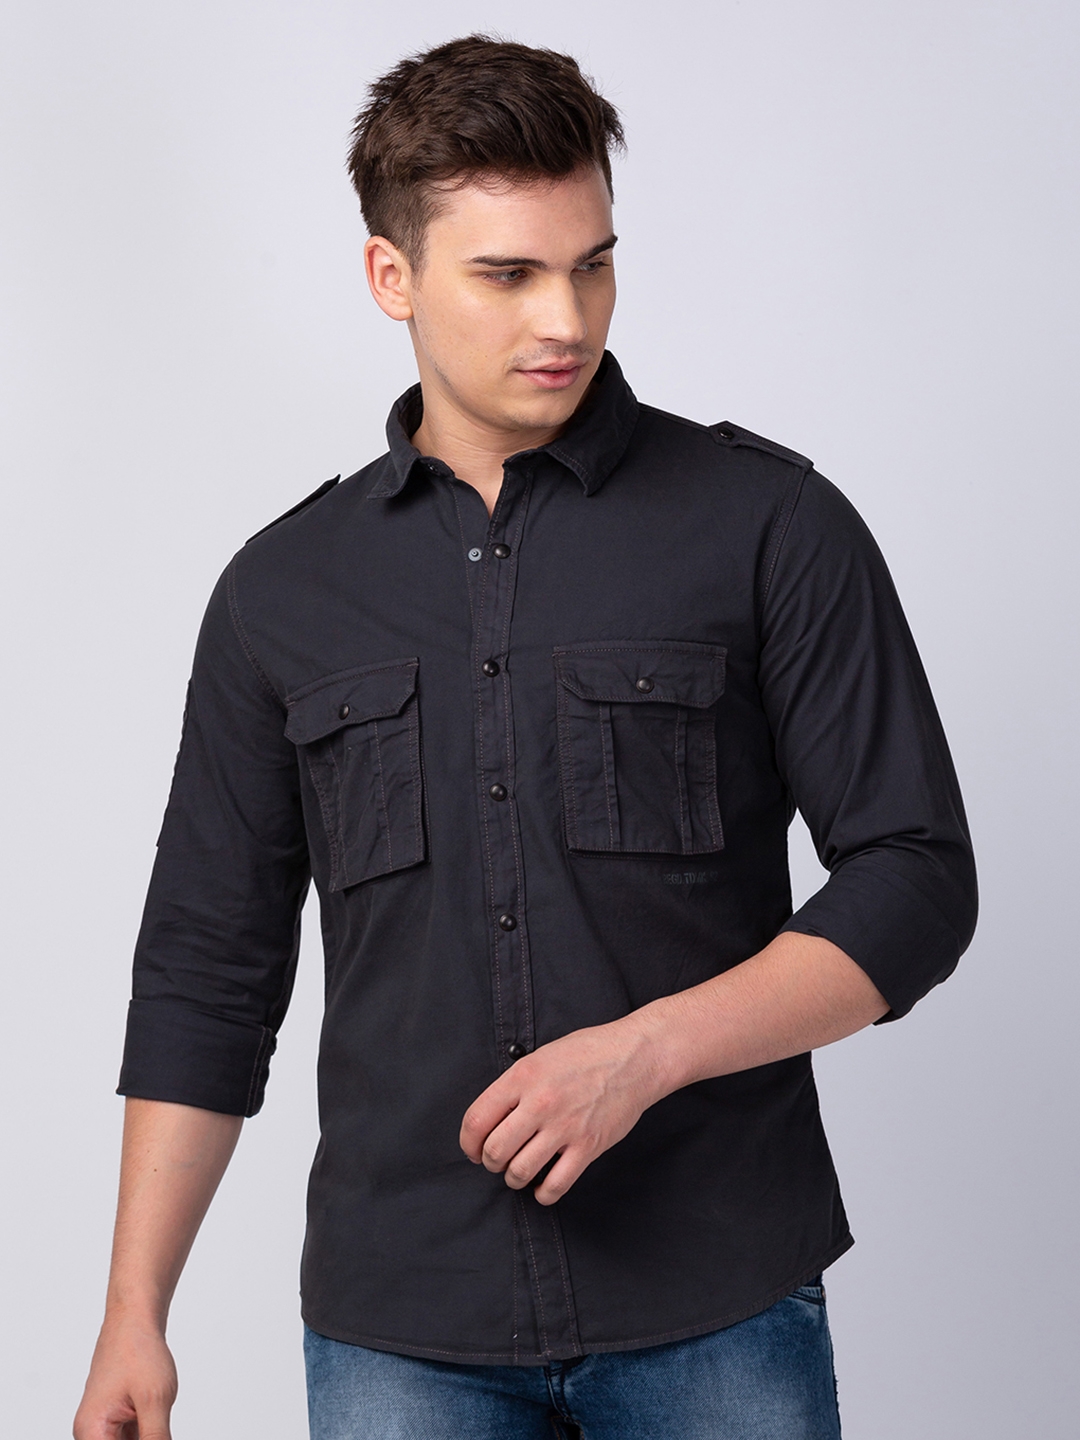 Spykar | Men's Grey Cotton Solid Casual Shirts 0